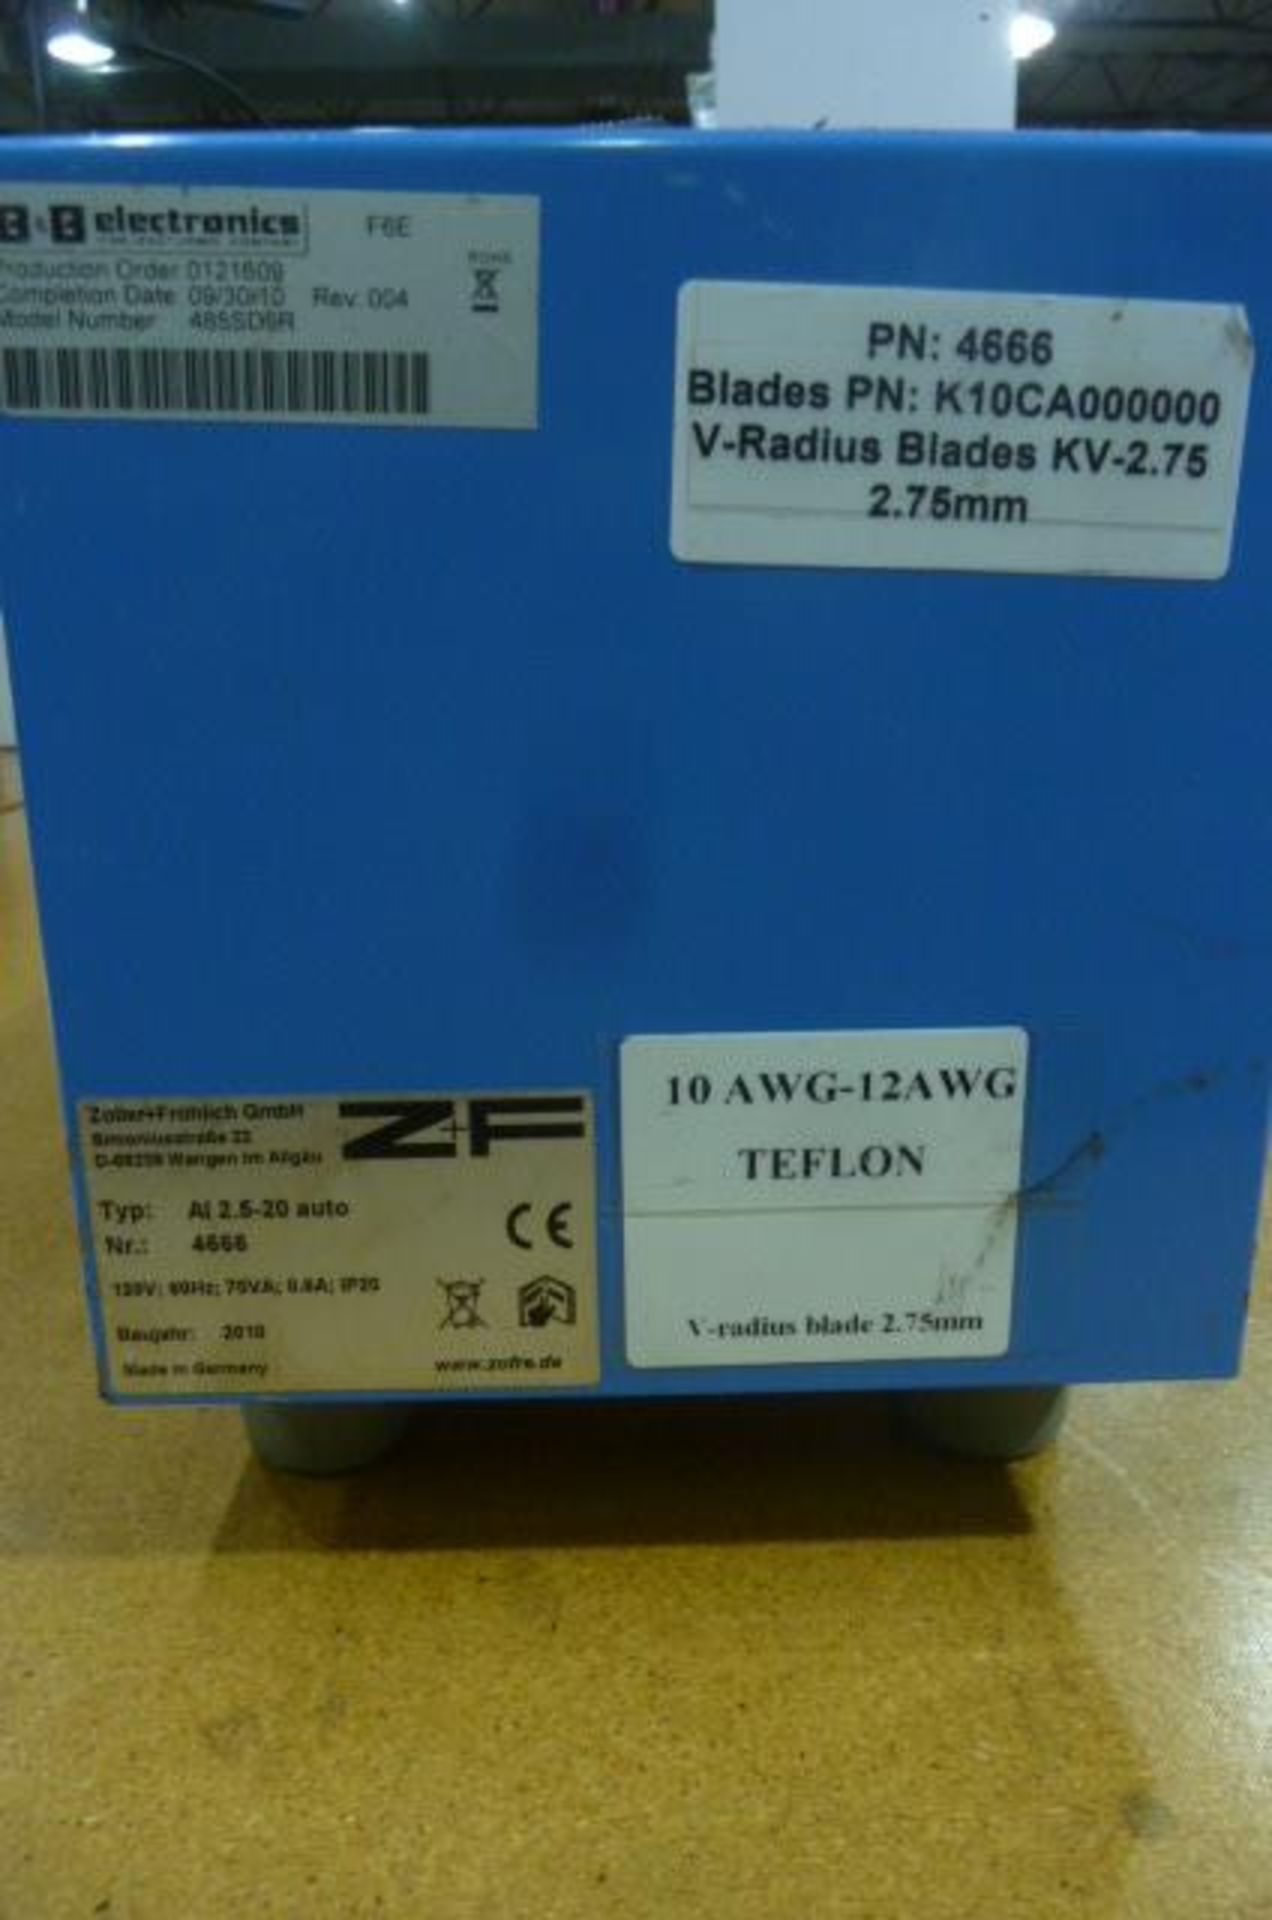 Z & F automatic wire stripper, AL 2.5-20 auto AWG 10-12 - Image 2 of 2